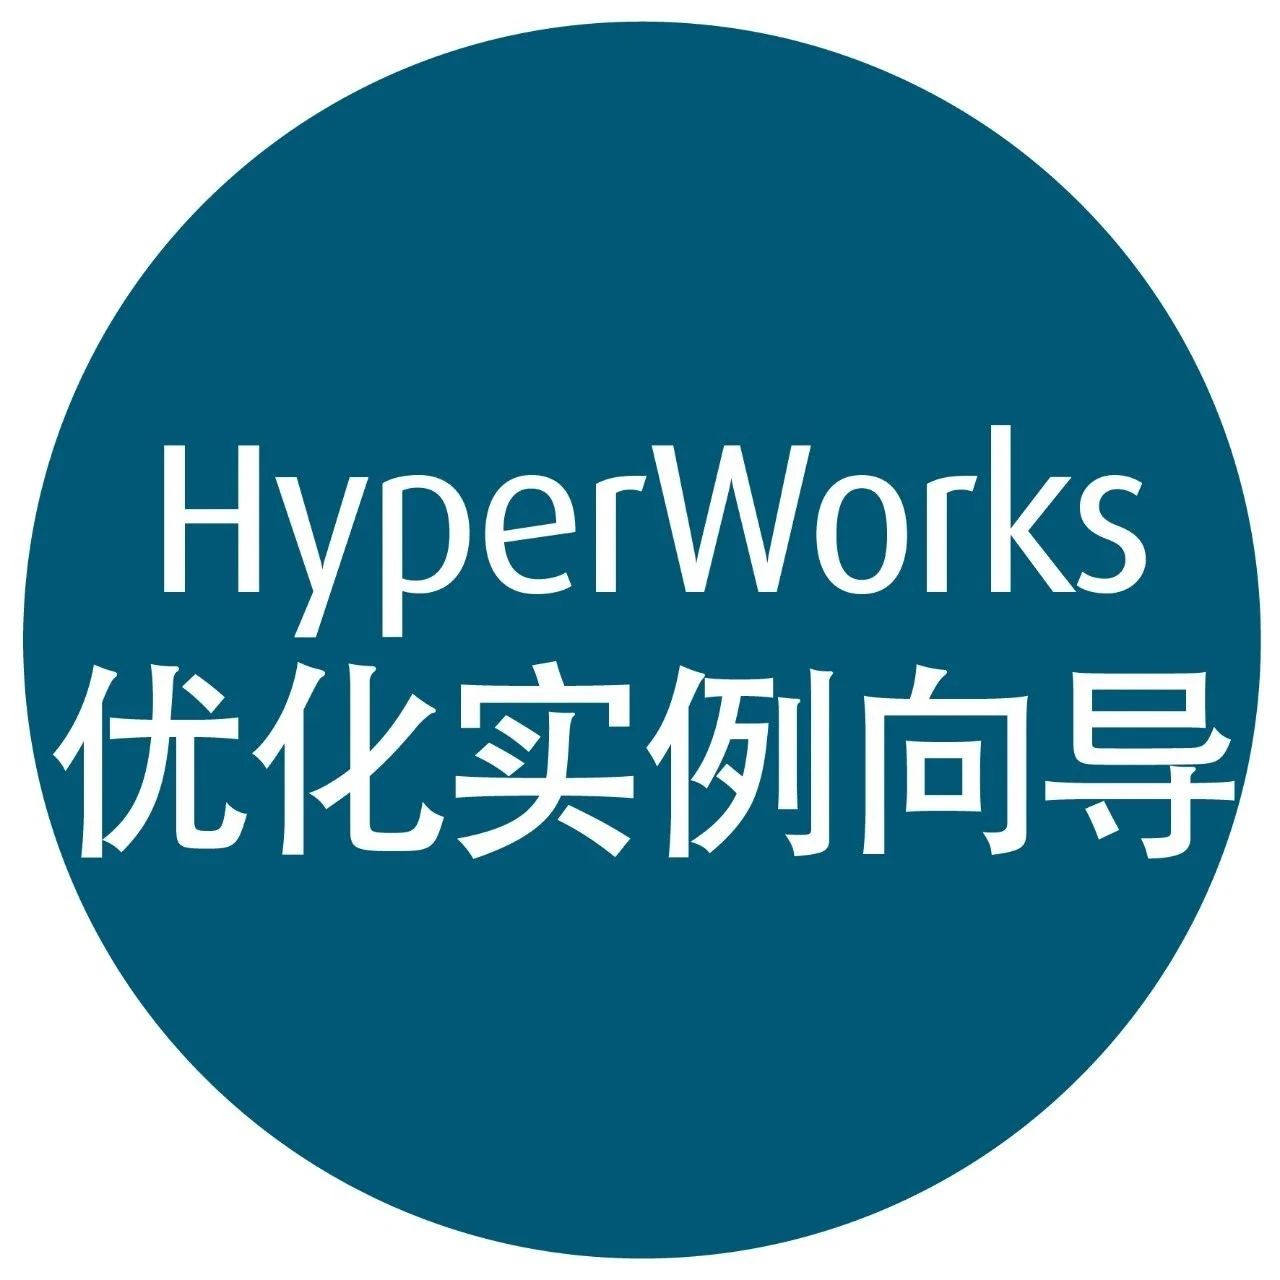 【HyperWorks优化实例向导】之HyperMesh后台生成参数化优化模型